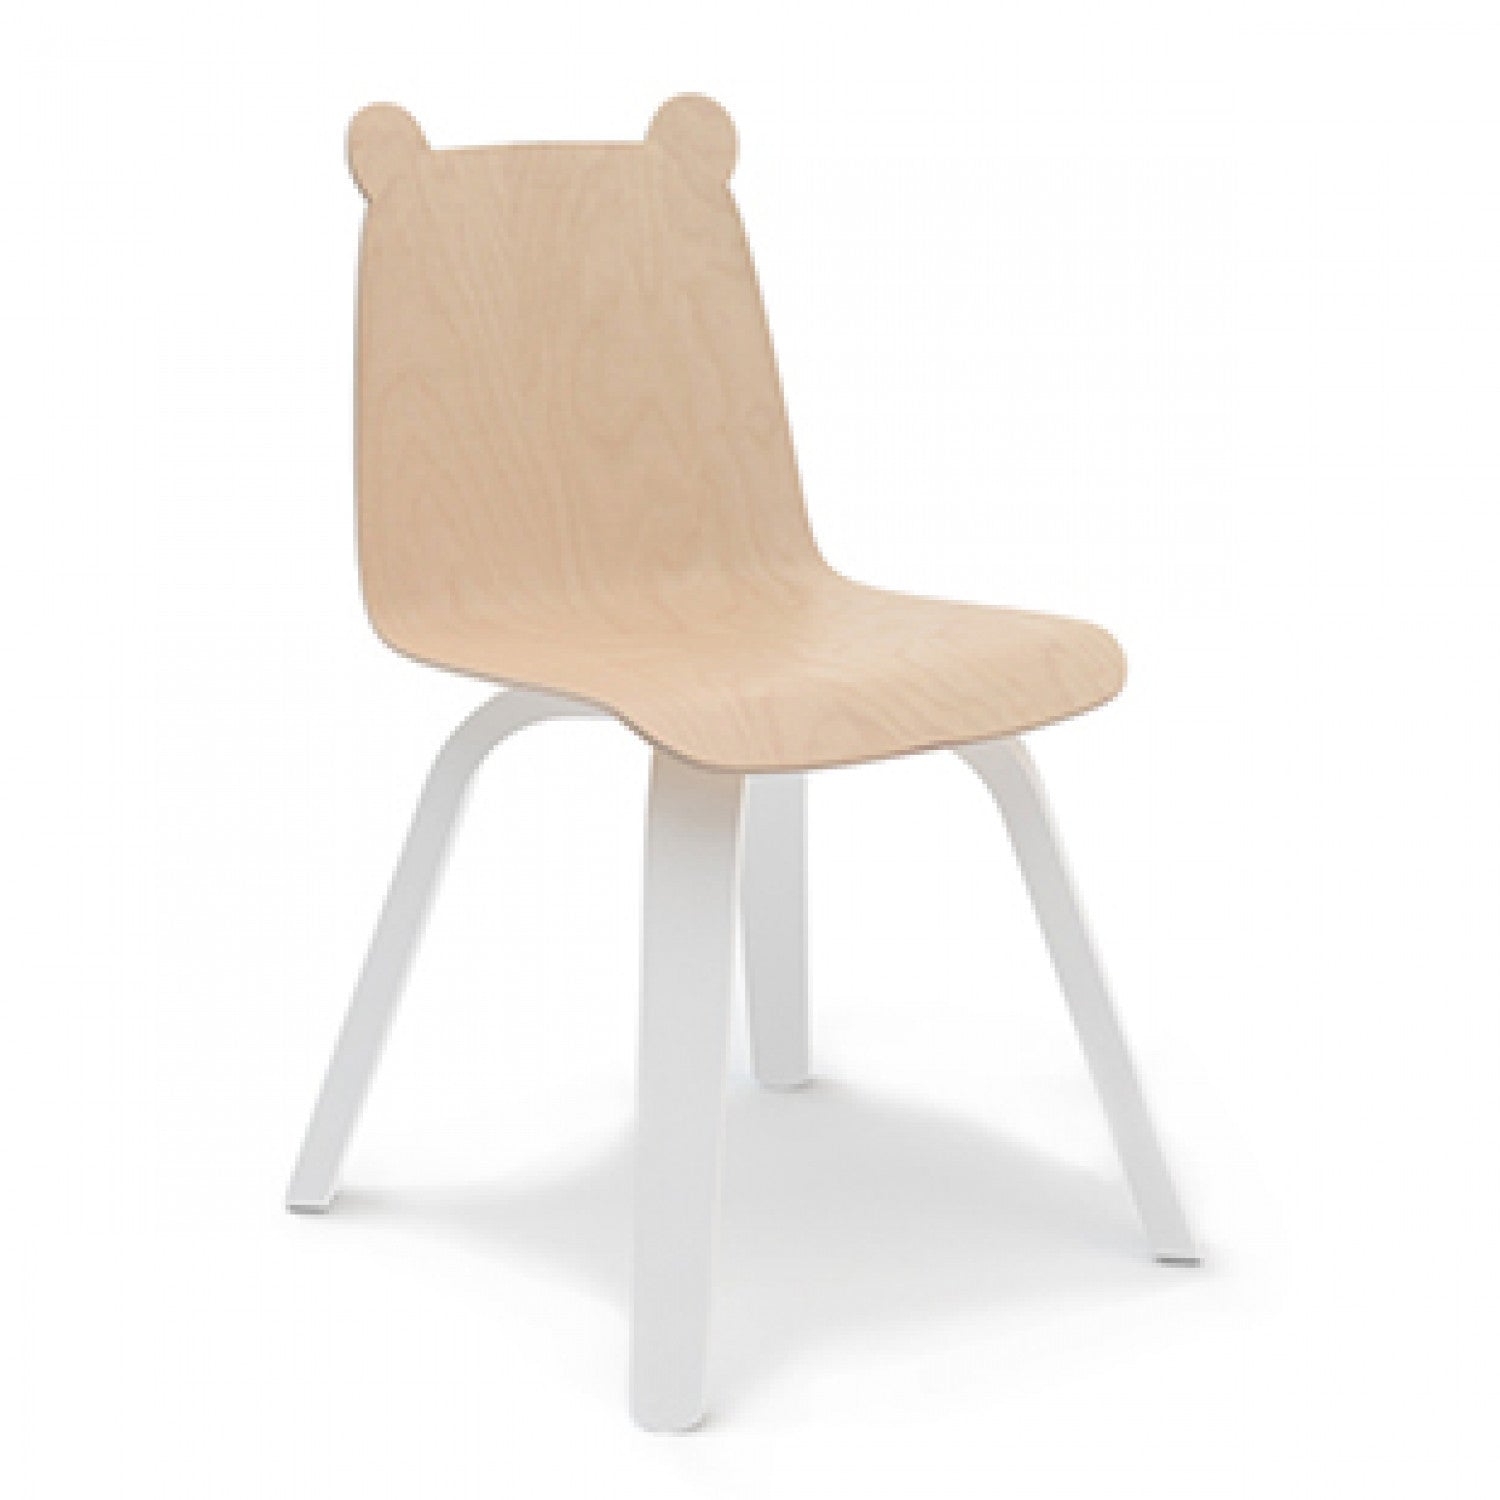 oeuf-play-chair-bear-furniture-oeuf-1pycb01-01